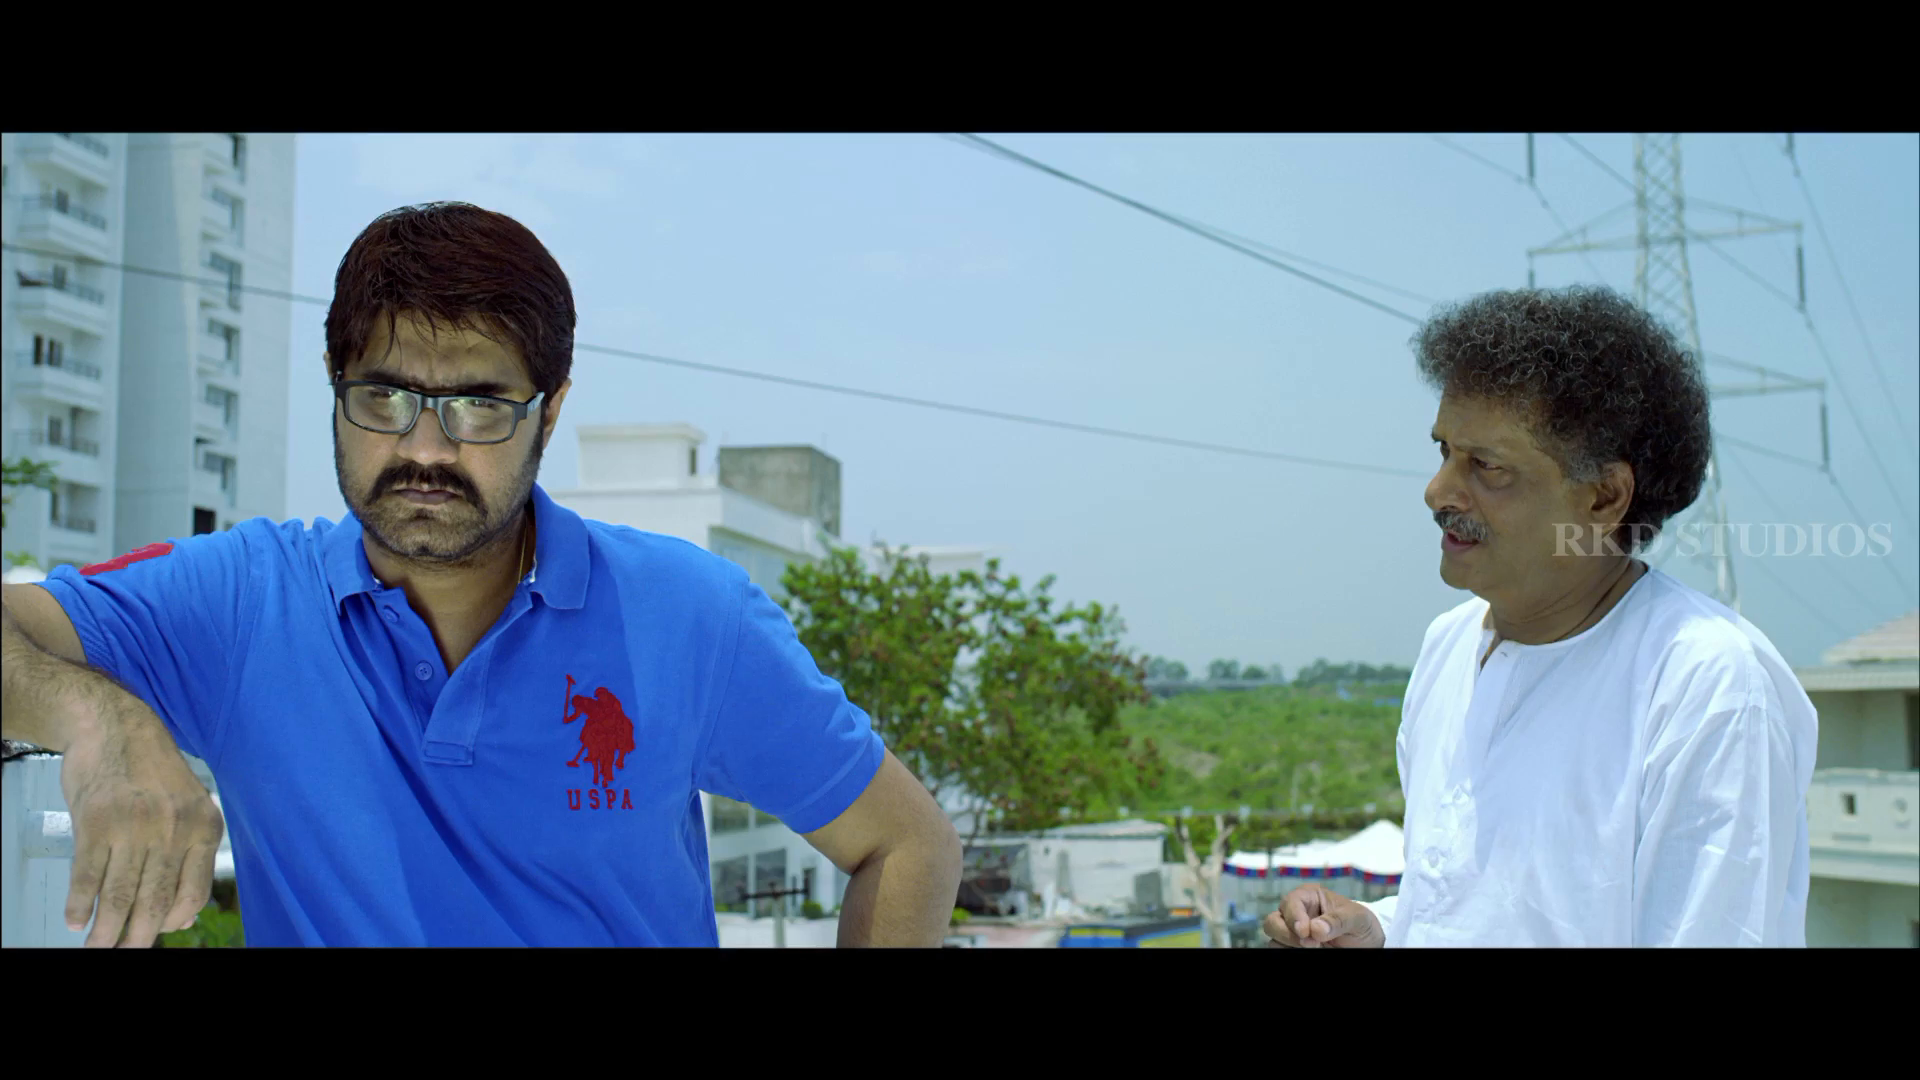 watch dhoom 2 full movie online in tamil